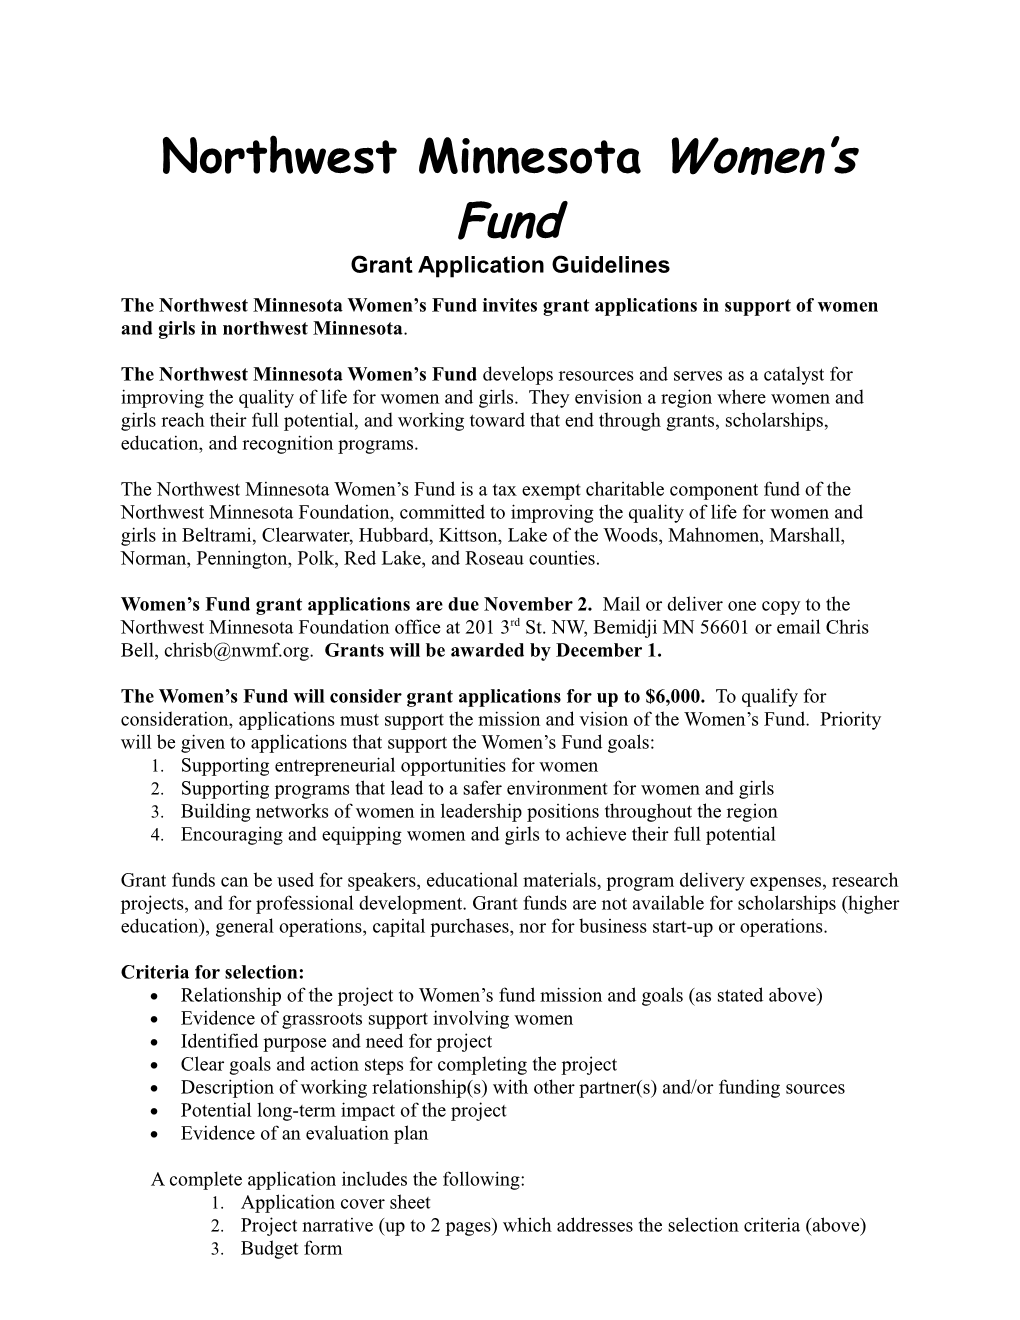 Northwest Minnesota Women S Fund